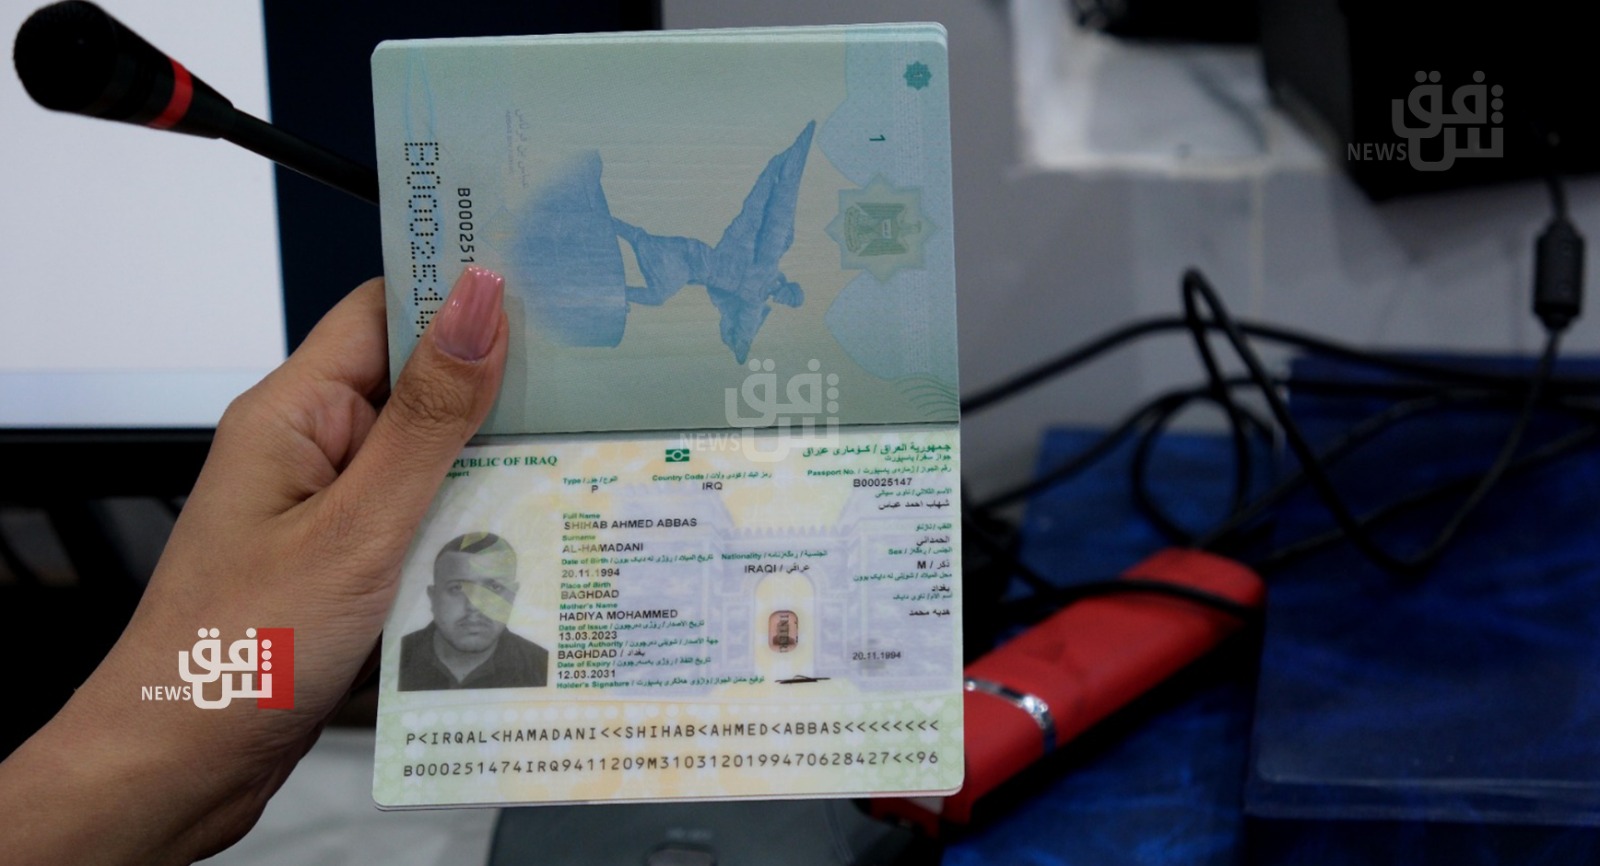 UAE leads Arab nations, Iraq lags behind in passport rankings